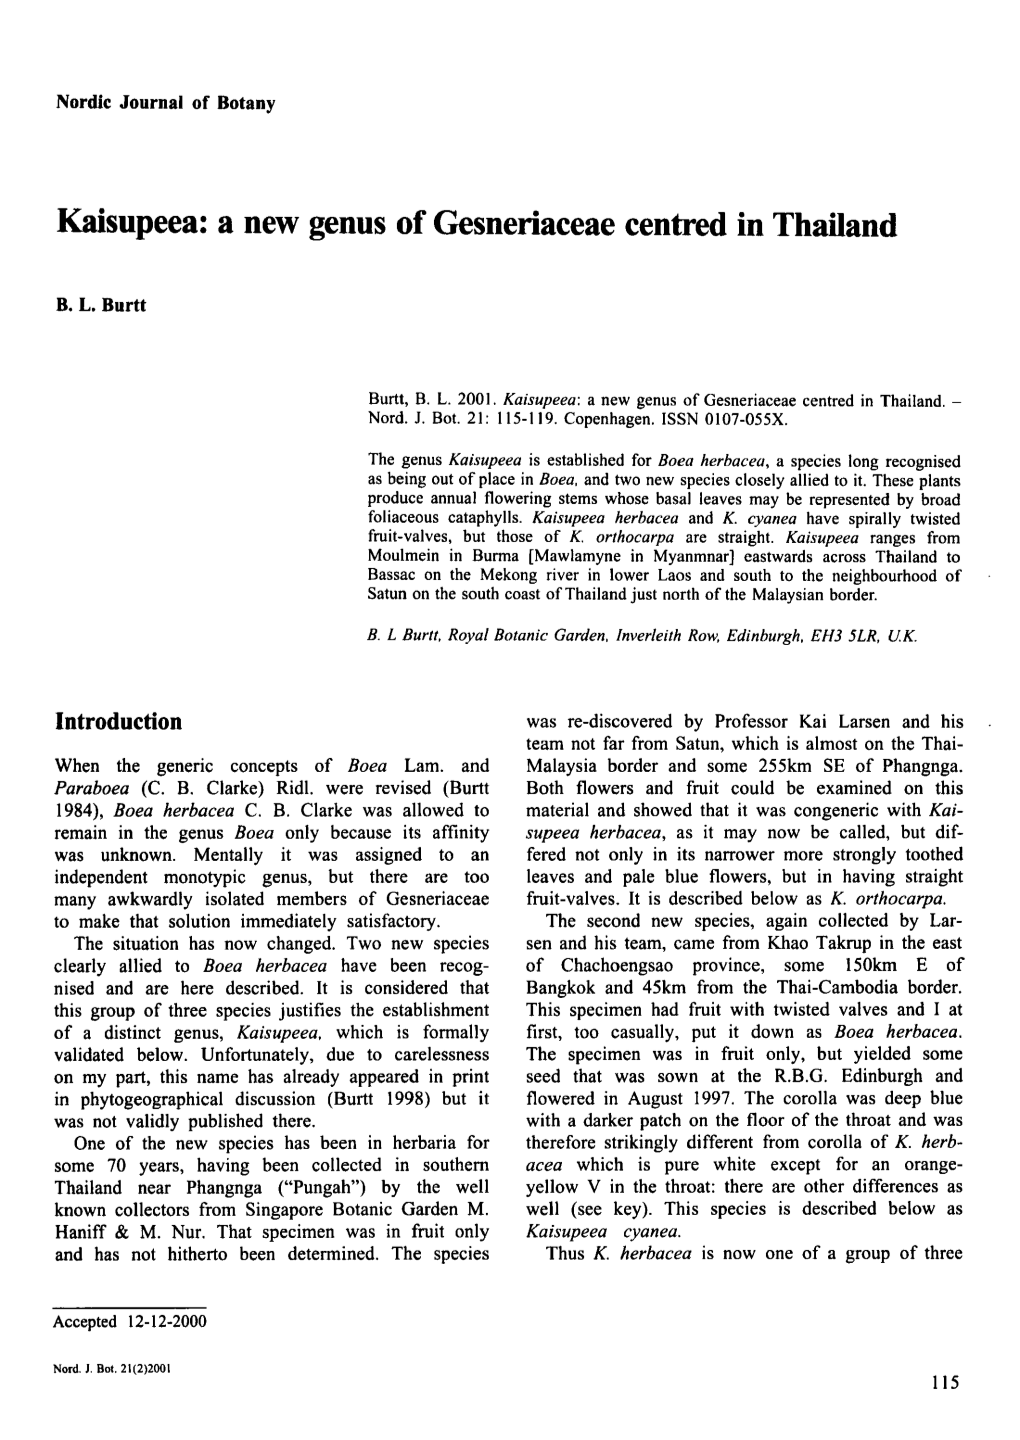 Kaisupeea: a New Genus of Gesneriaceae Centred in Thailand